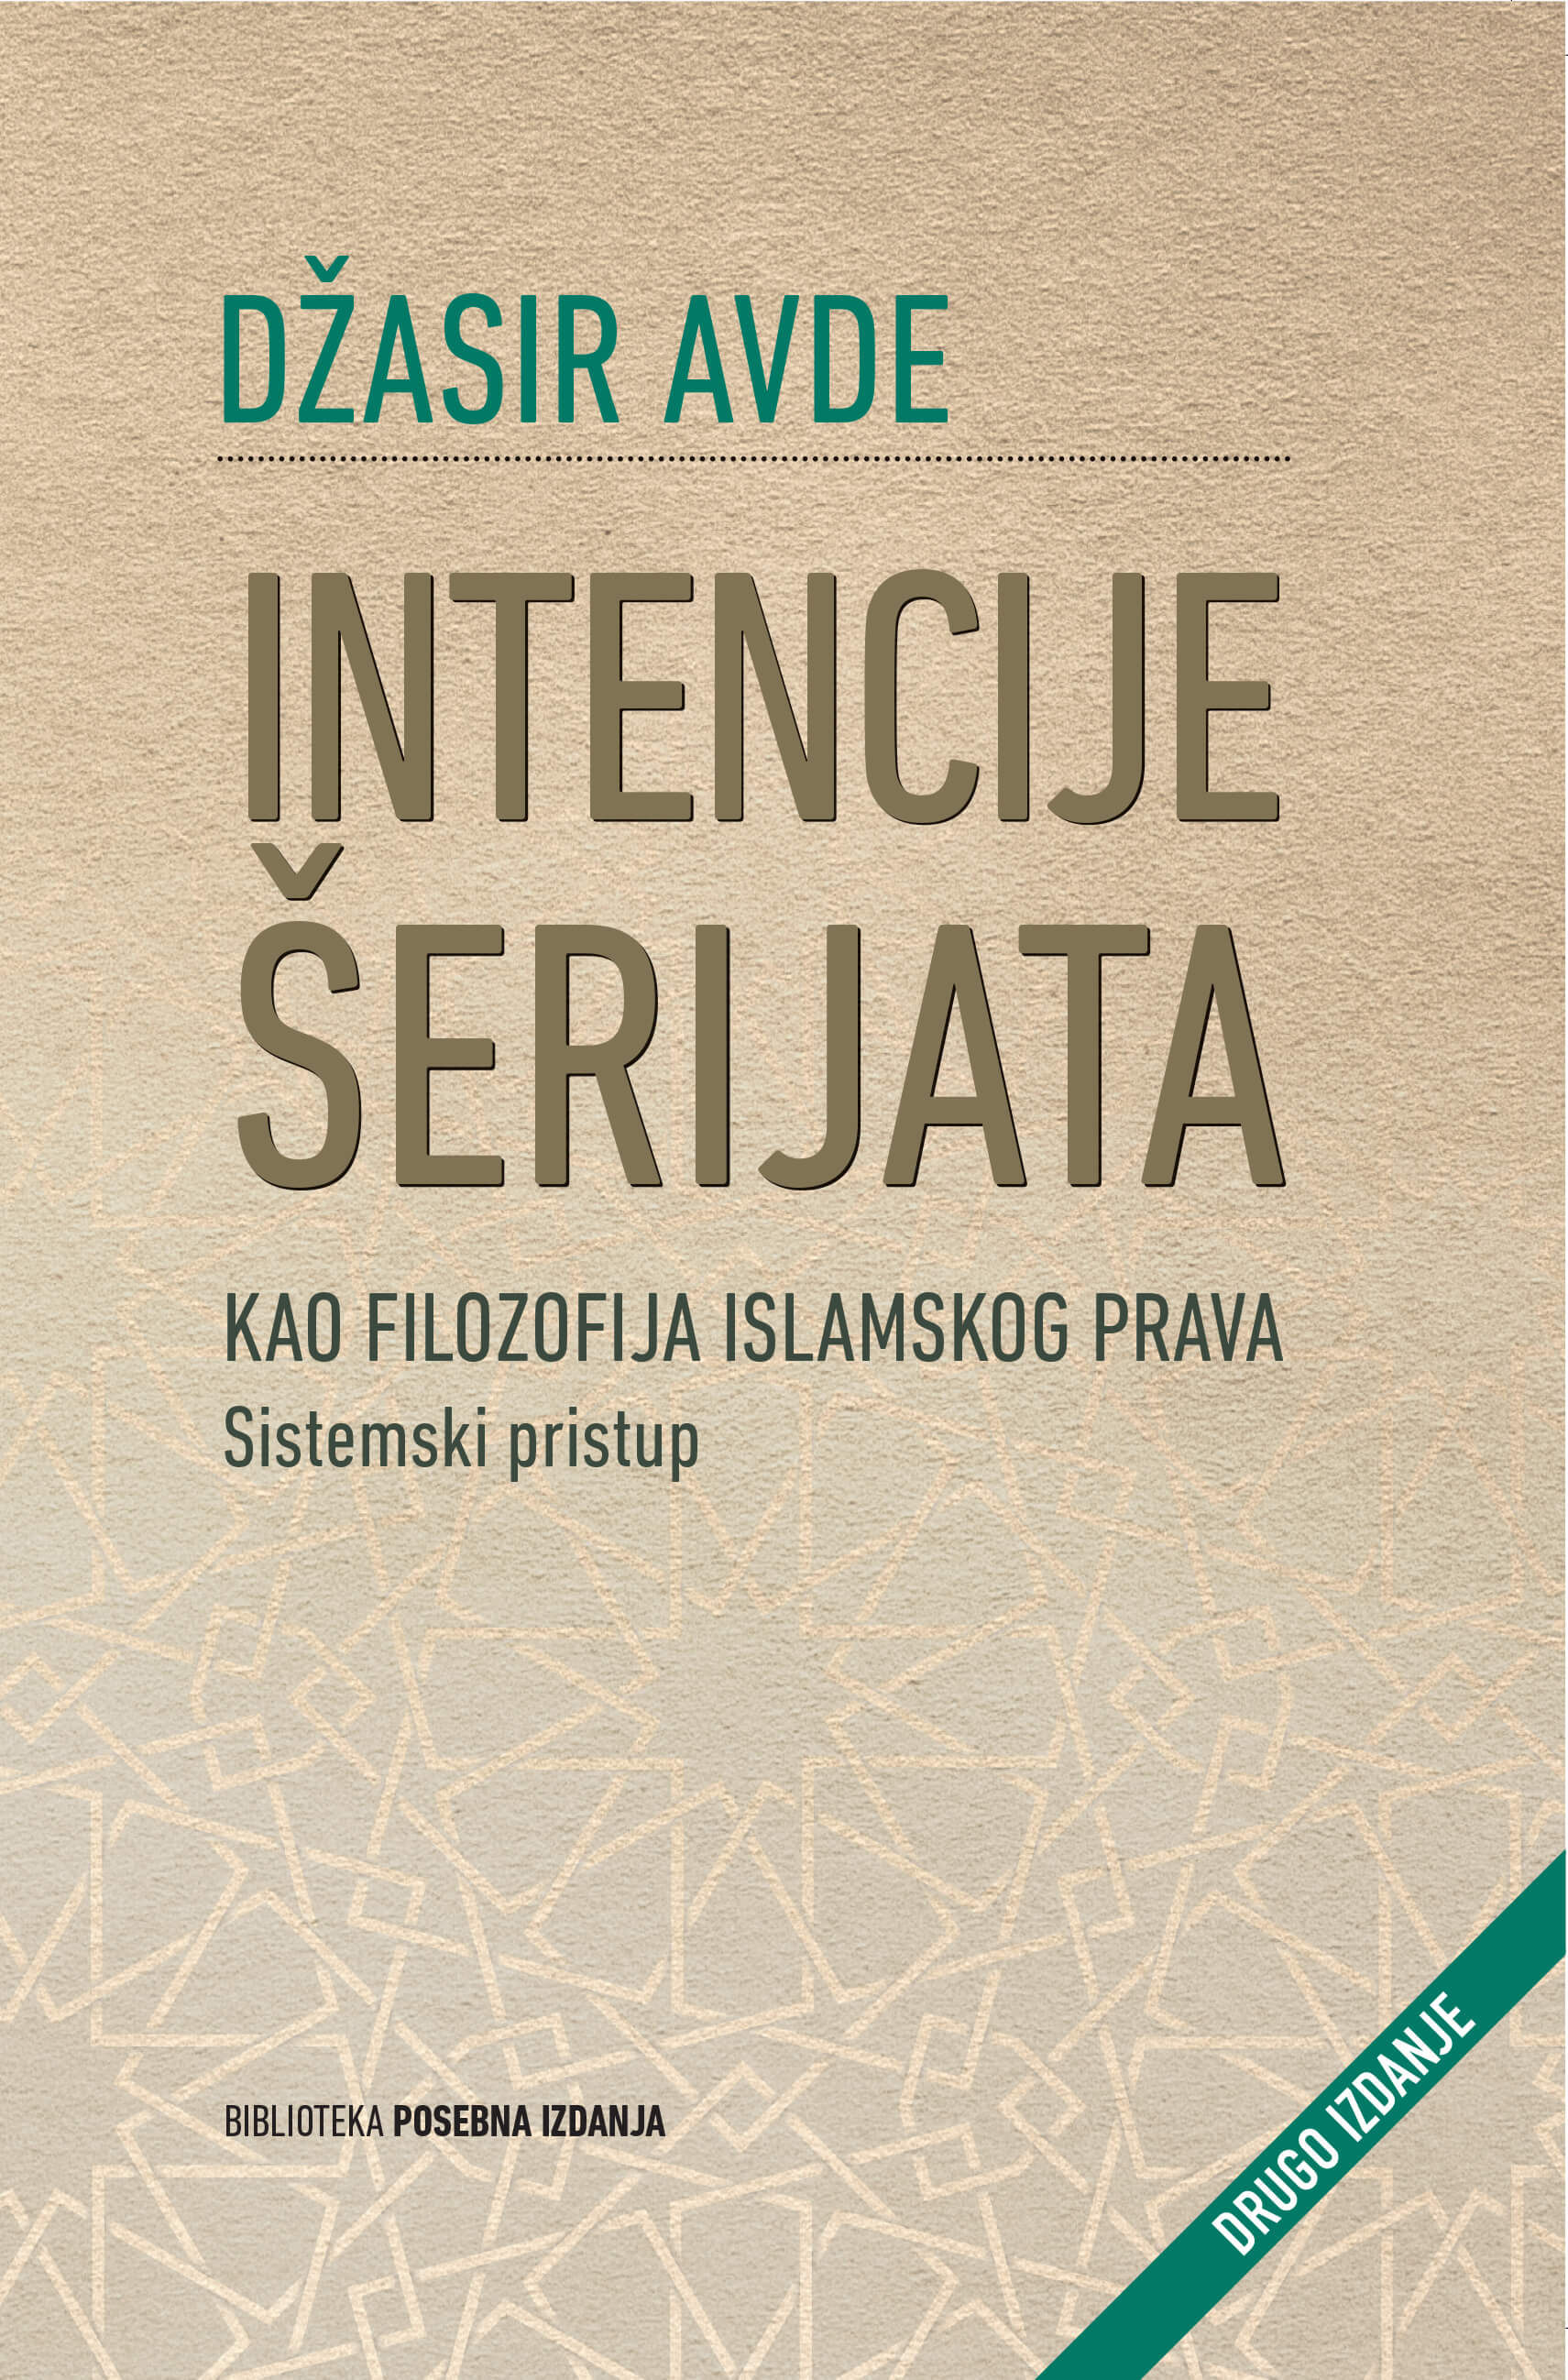 Bosnian: Maqasid Al-Shariah as Philosophy of Islamic Law: A Systems Approach